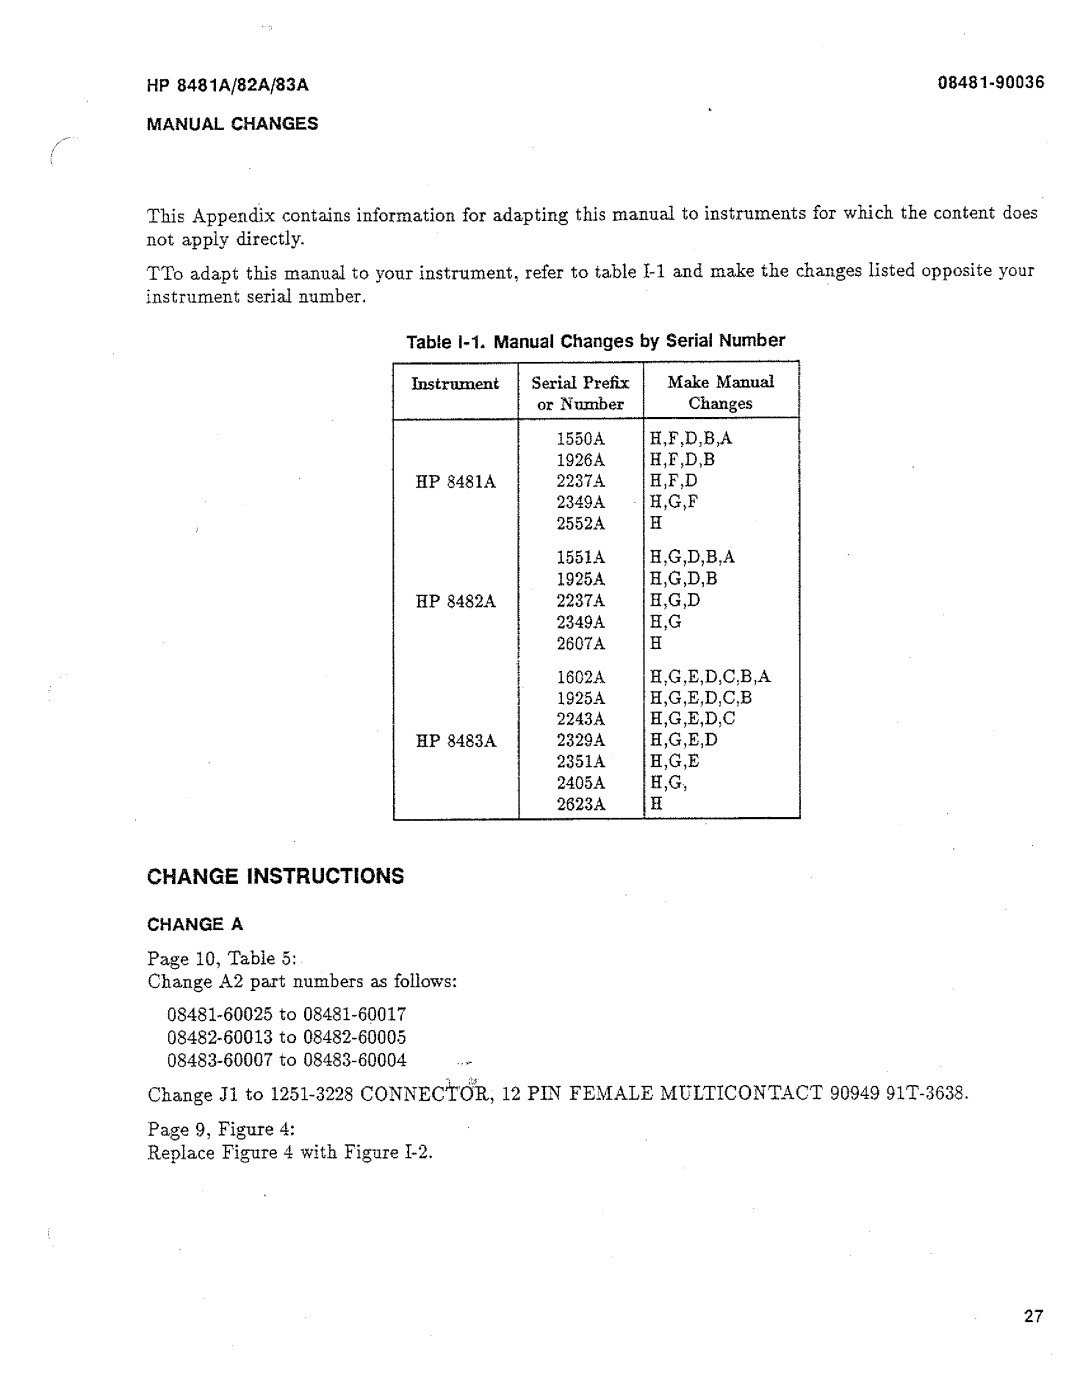 HP 8483A, 8481A, 8482A manual 